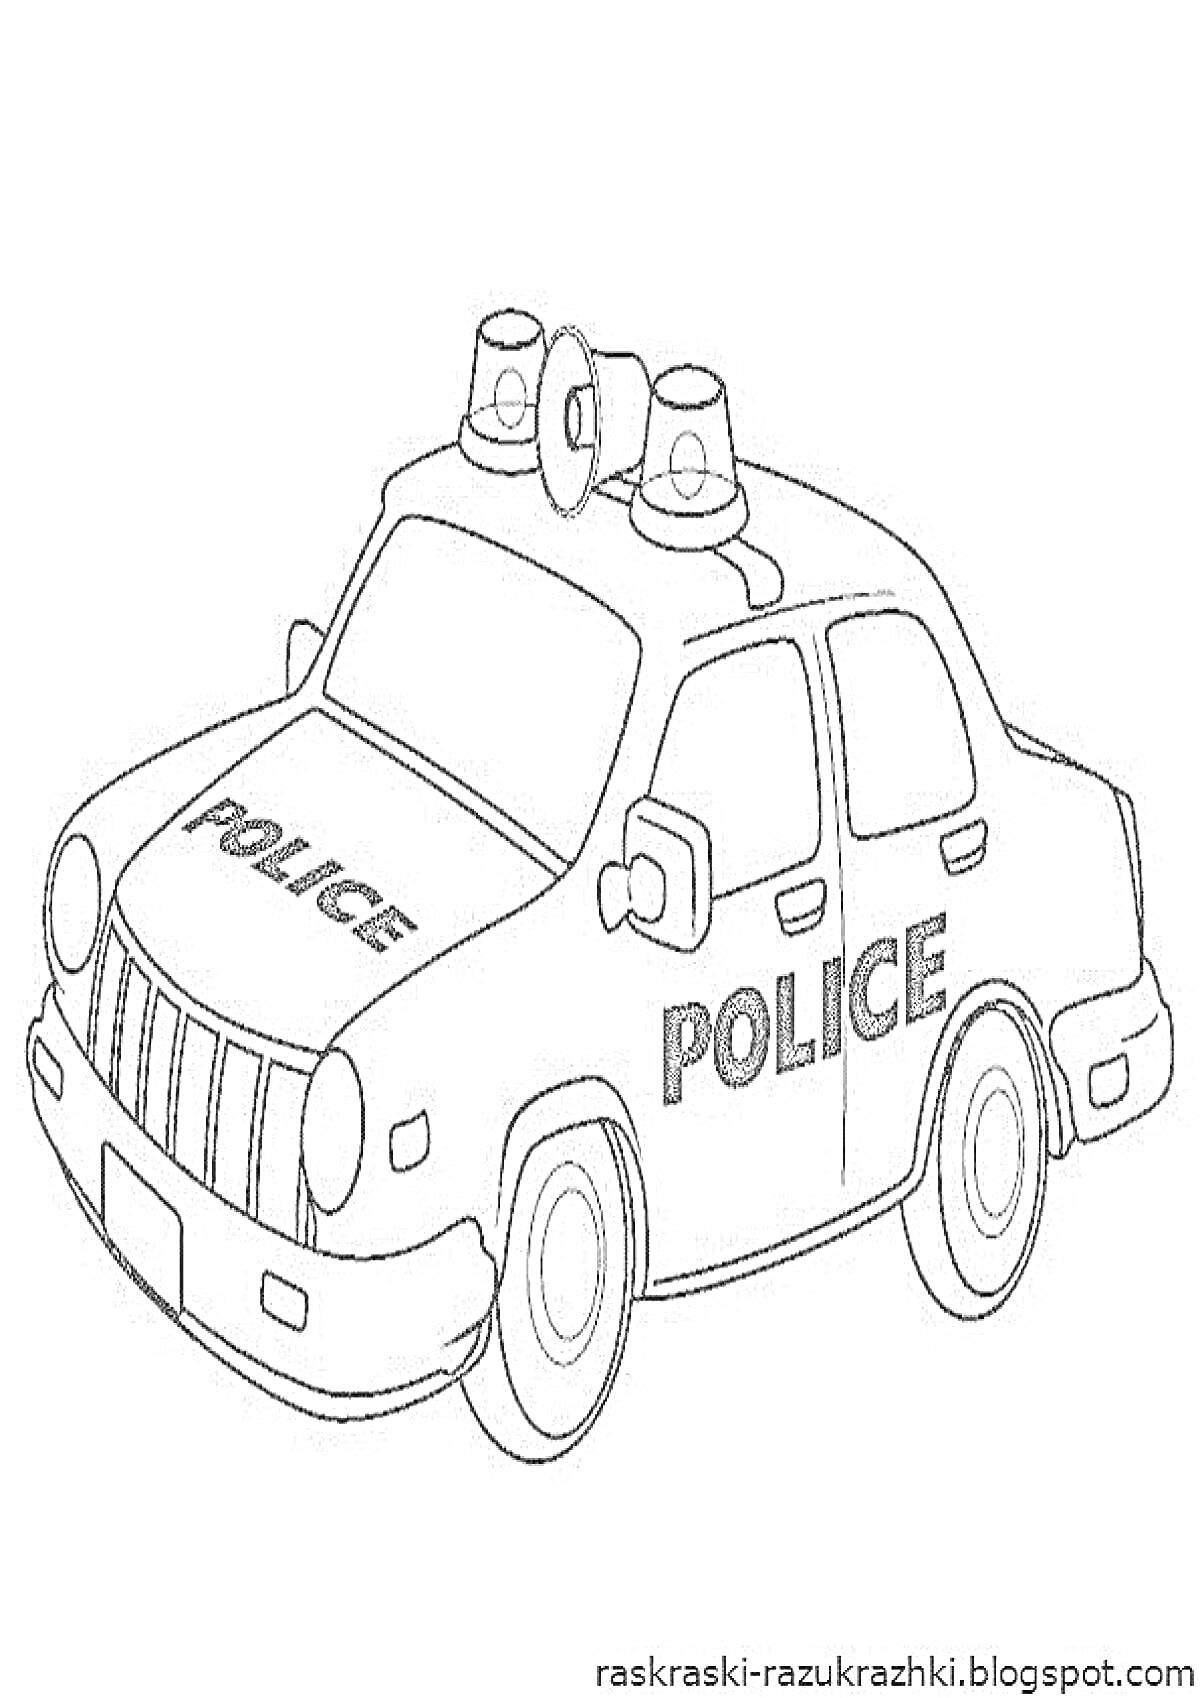 На раскраске изображено: Полицейская машина, Полиция, Милиция, Сирена, Служебный транспорт